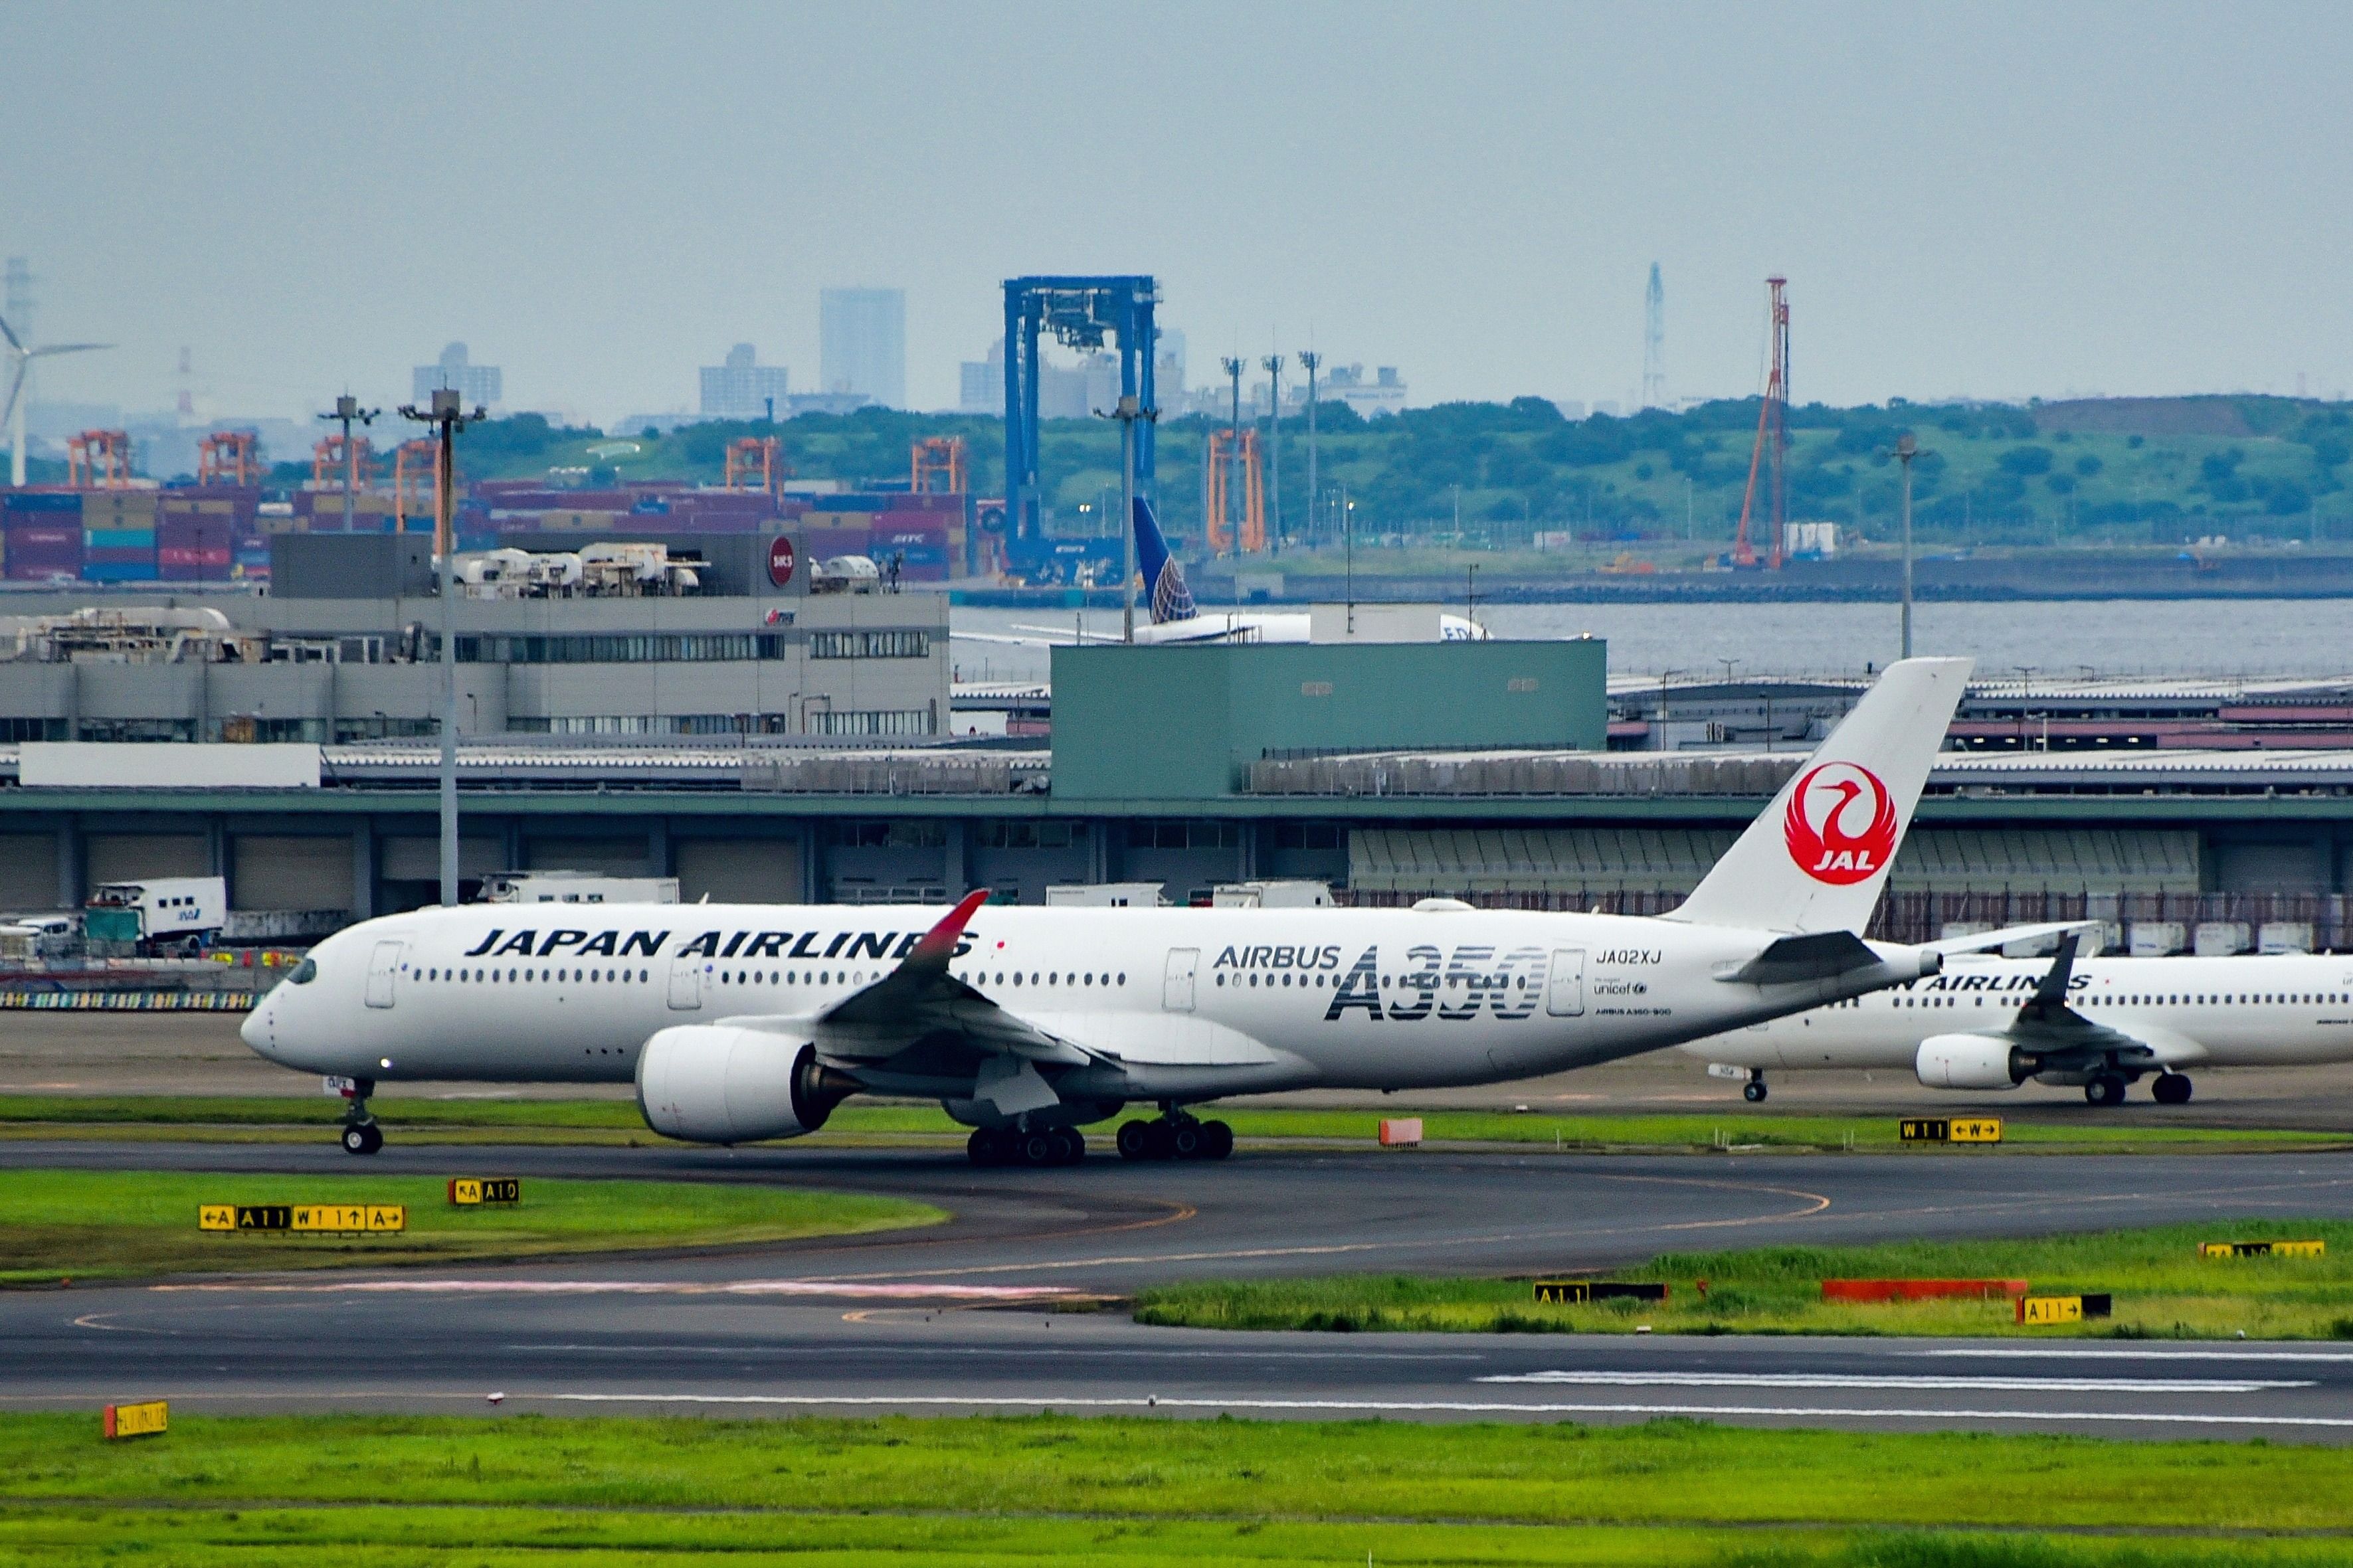 Japan Airlines Airbus A350 aircraft taxiing at Haneda Airport.